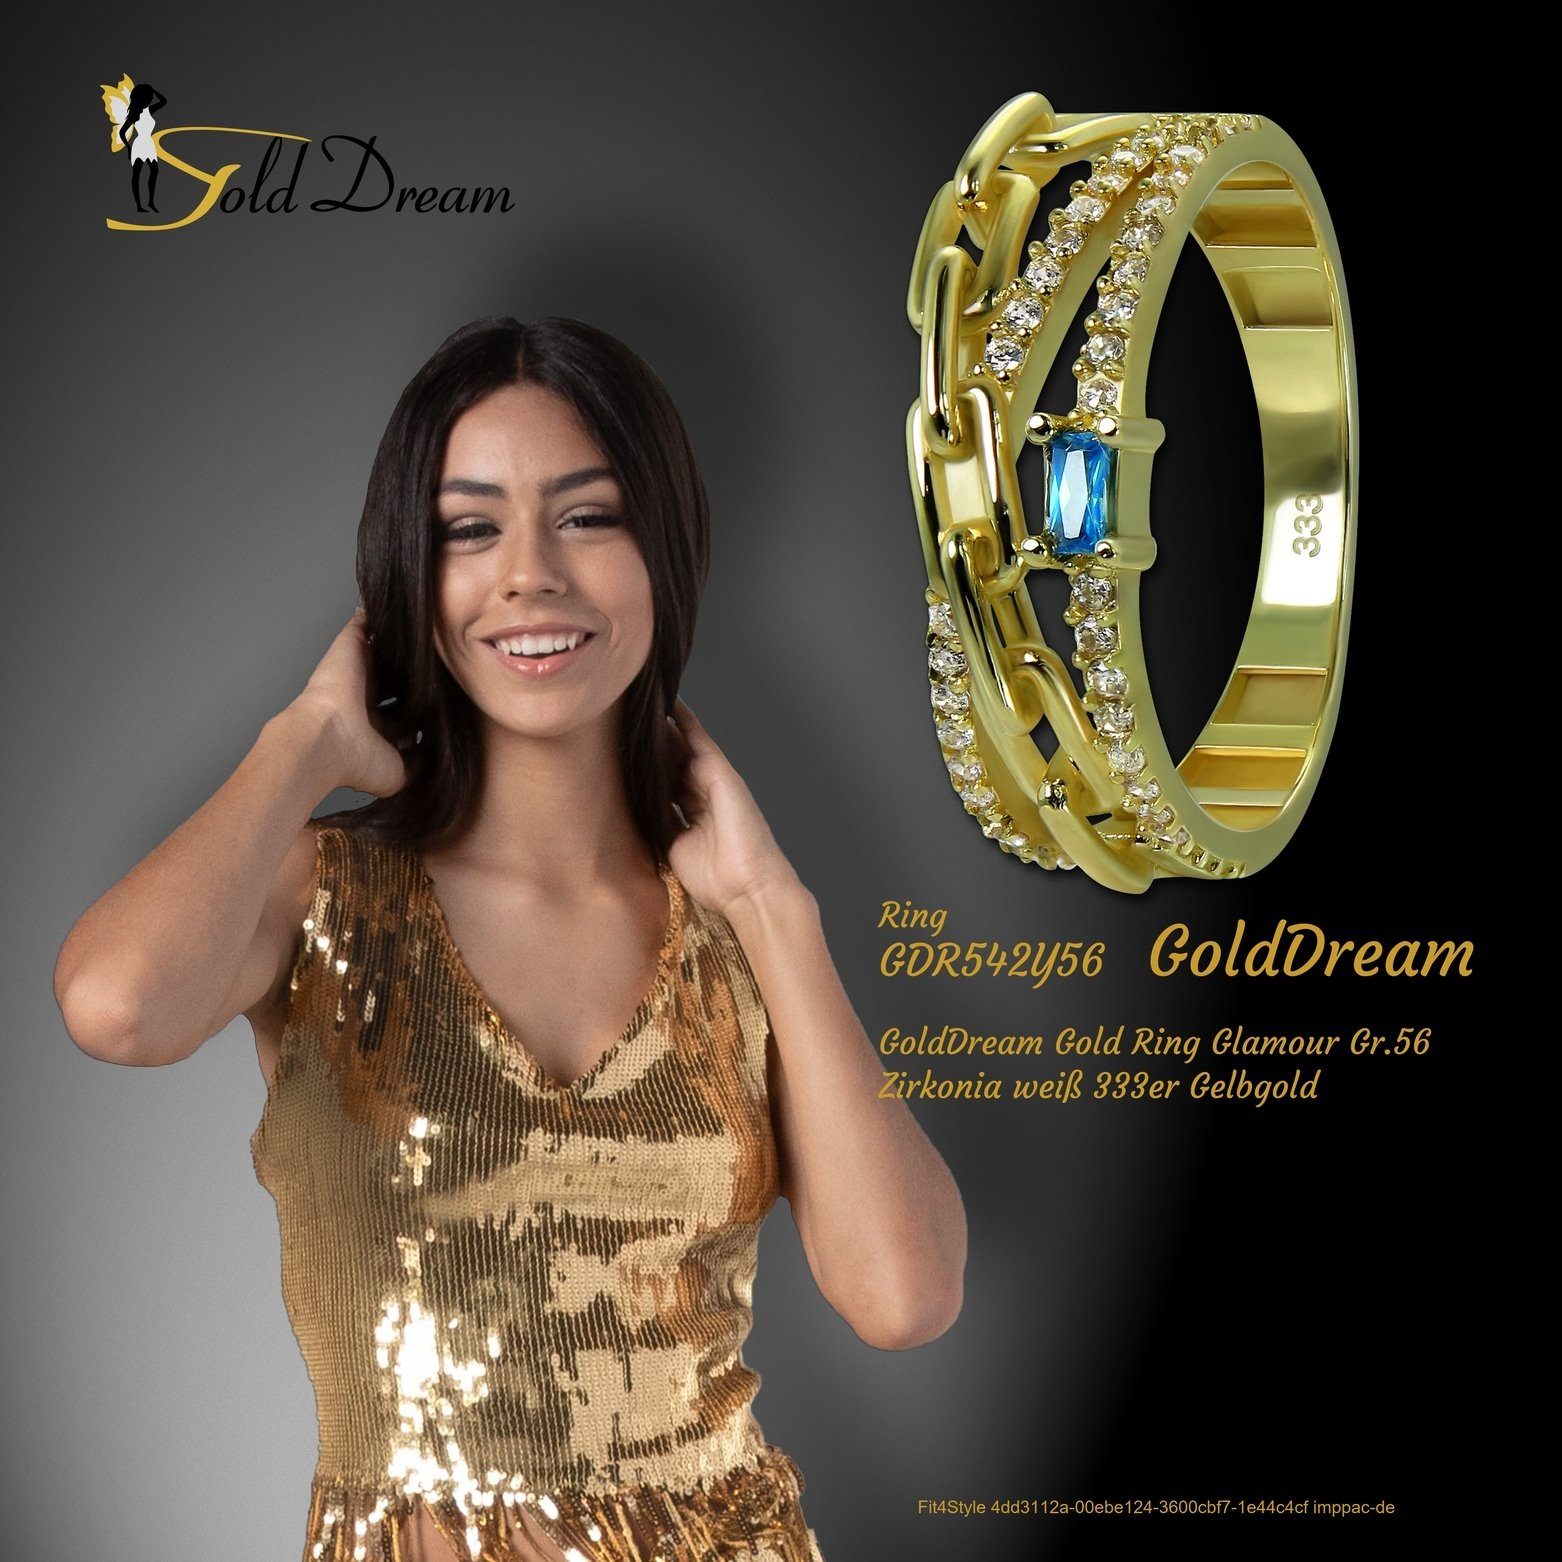 Gelbgold Glamour Karat, Gr.56 weiß, Goldring GoldDream GoldDream Gold gold, Ring - Damen 8 Glamour Farbe: 333 hellblau Ring (Fingerring),